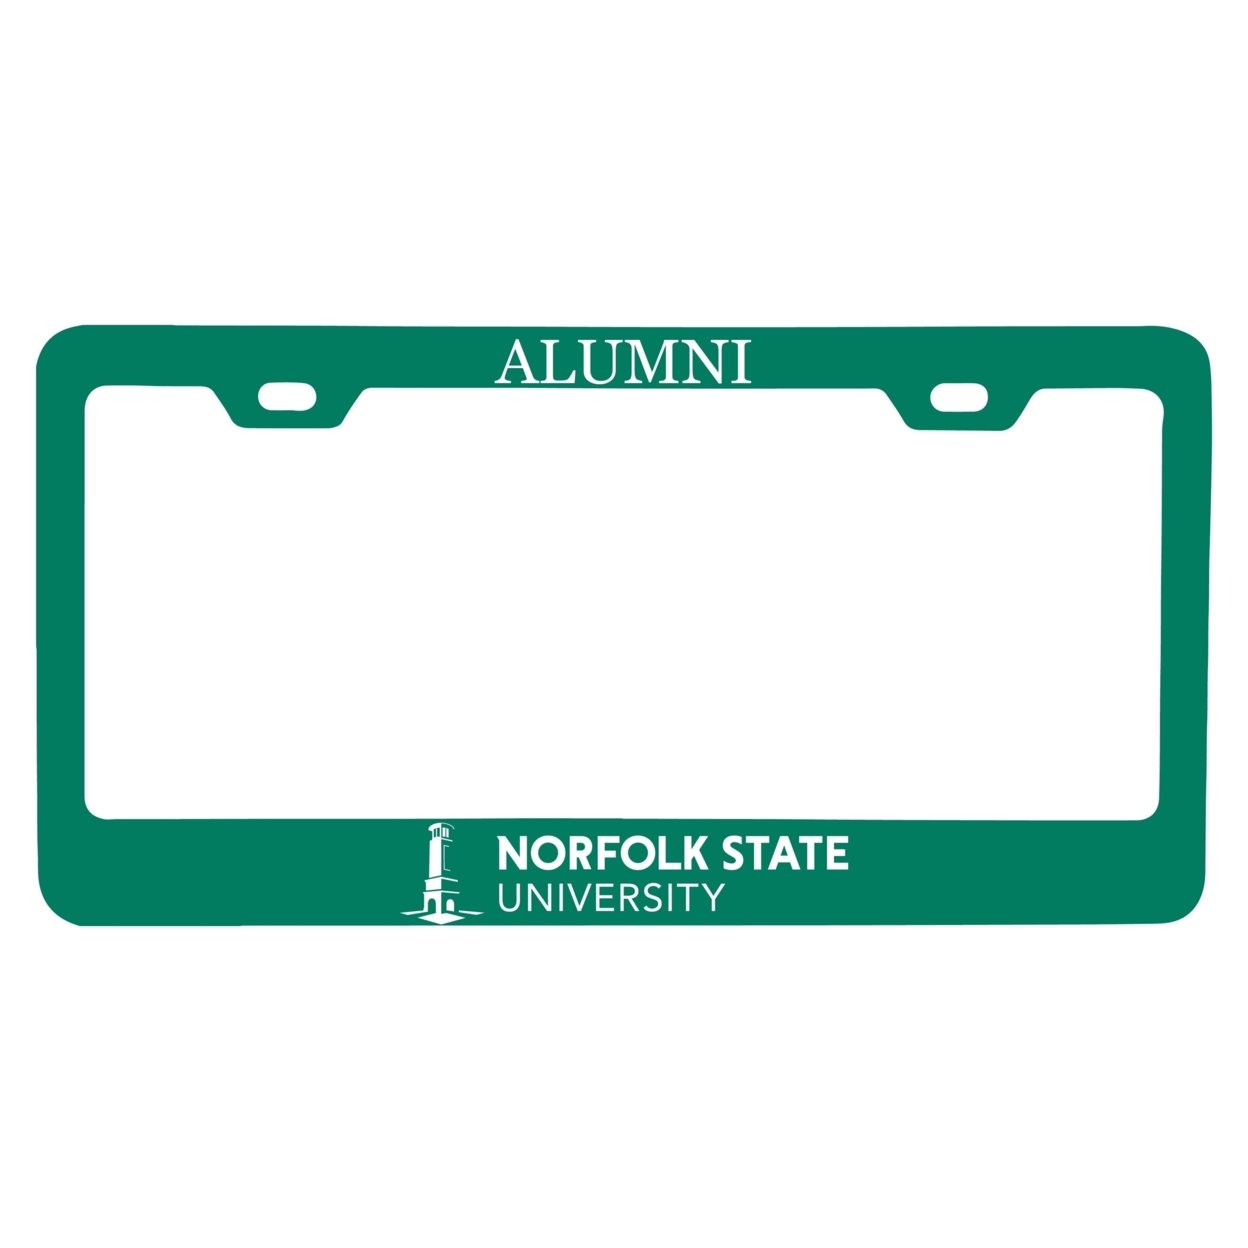 Norfolk State University Alumni License Plate Frame